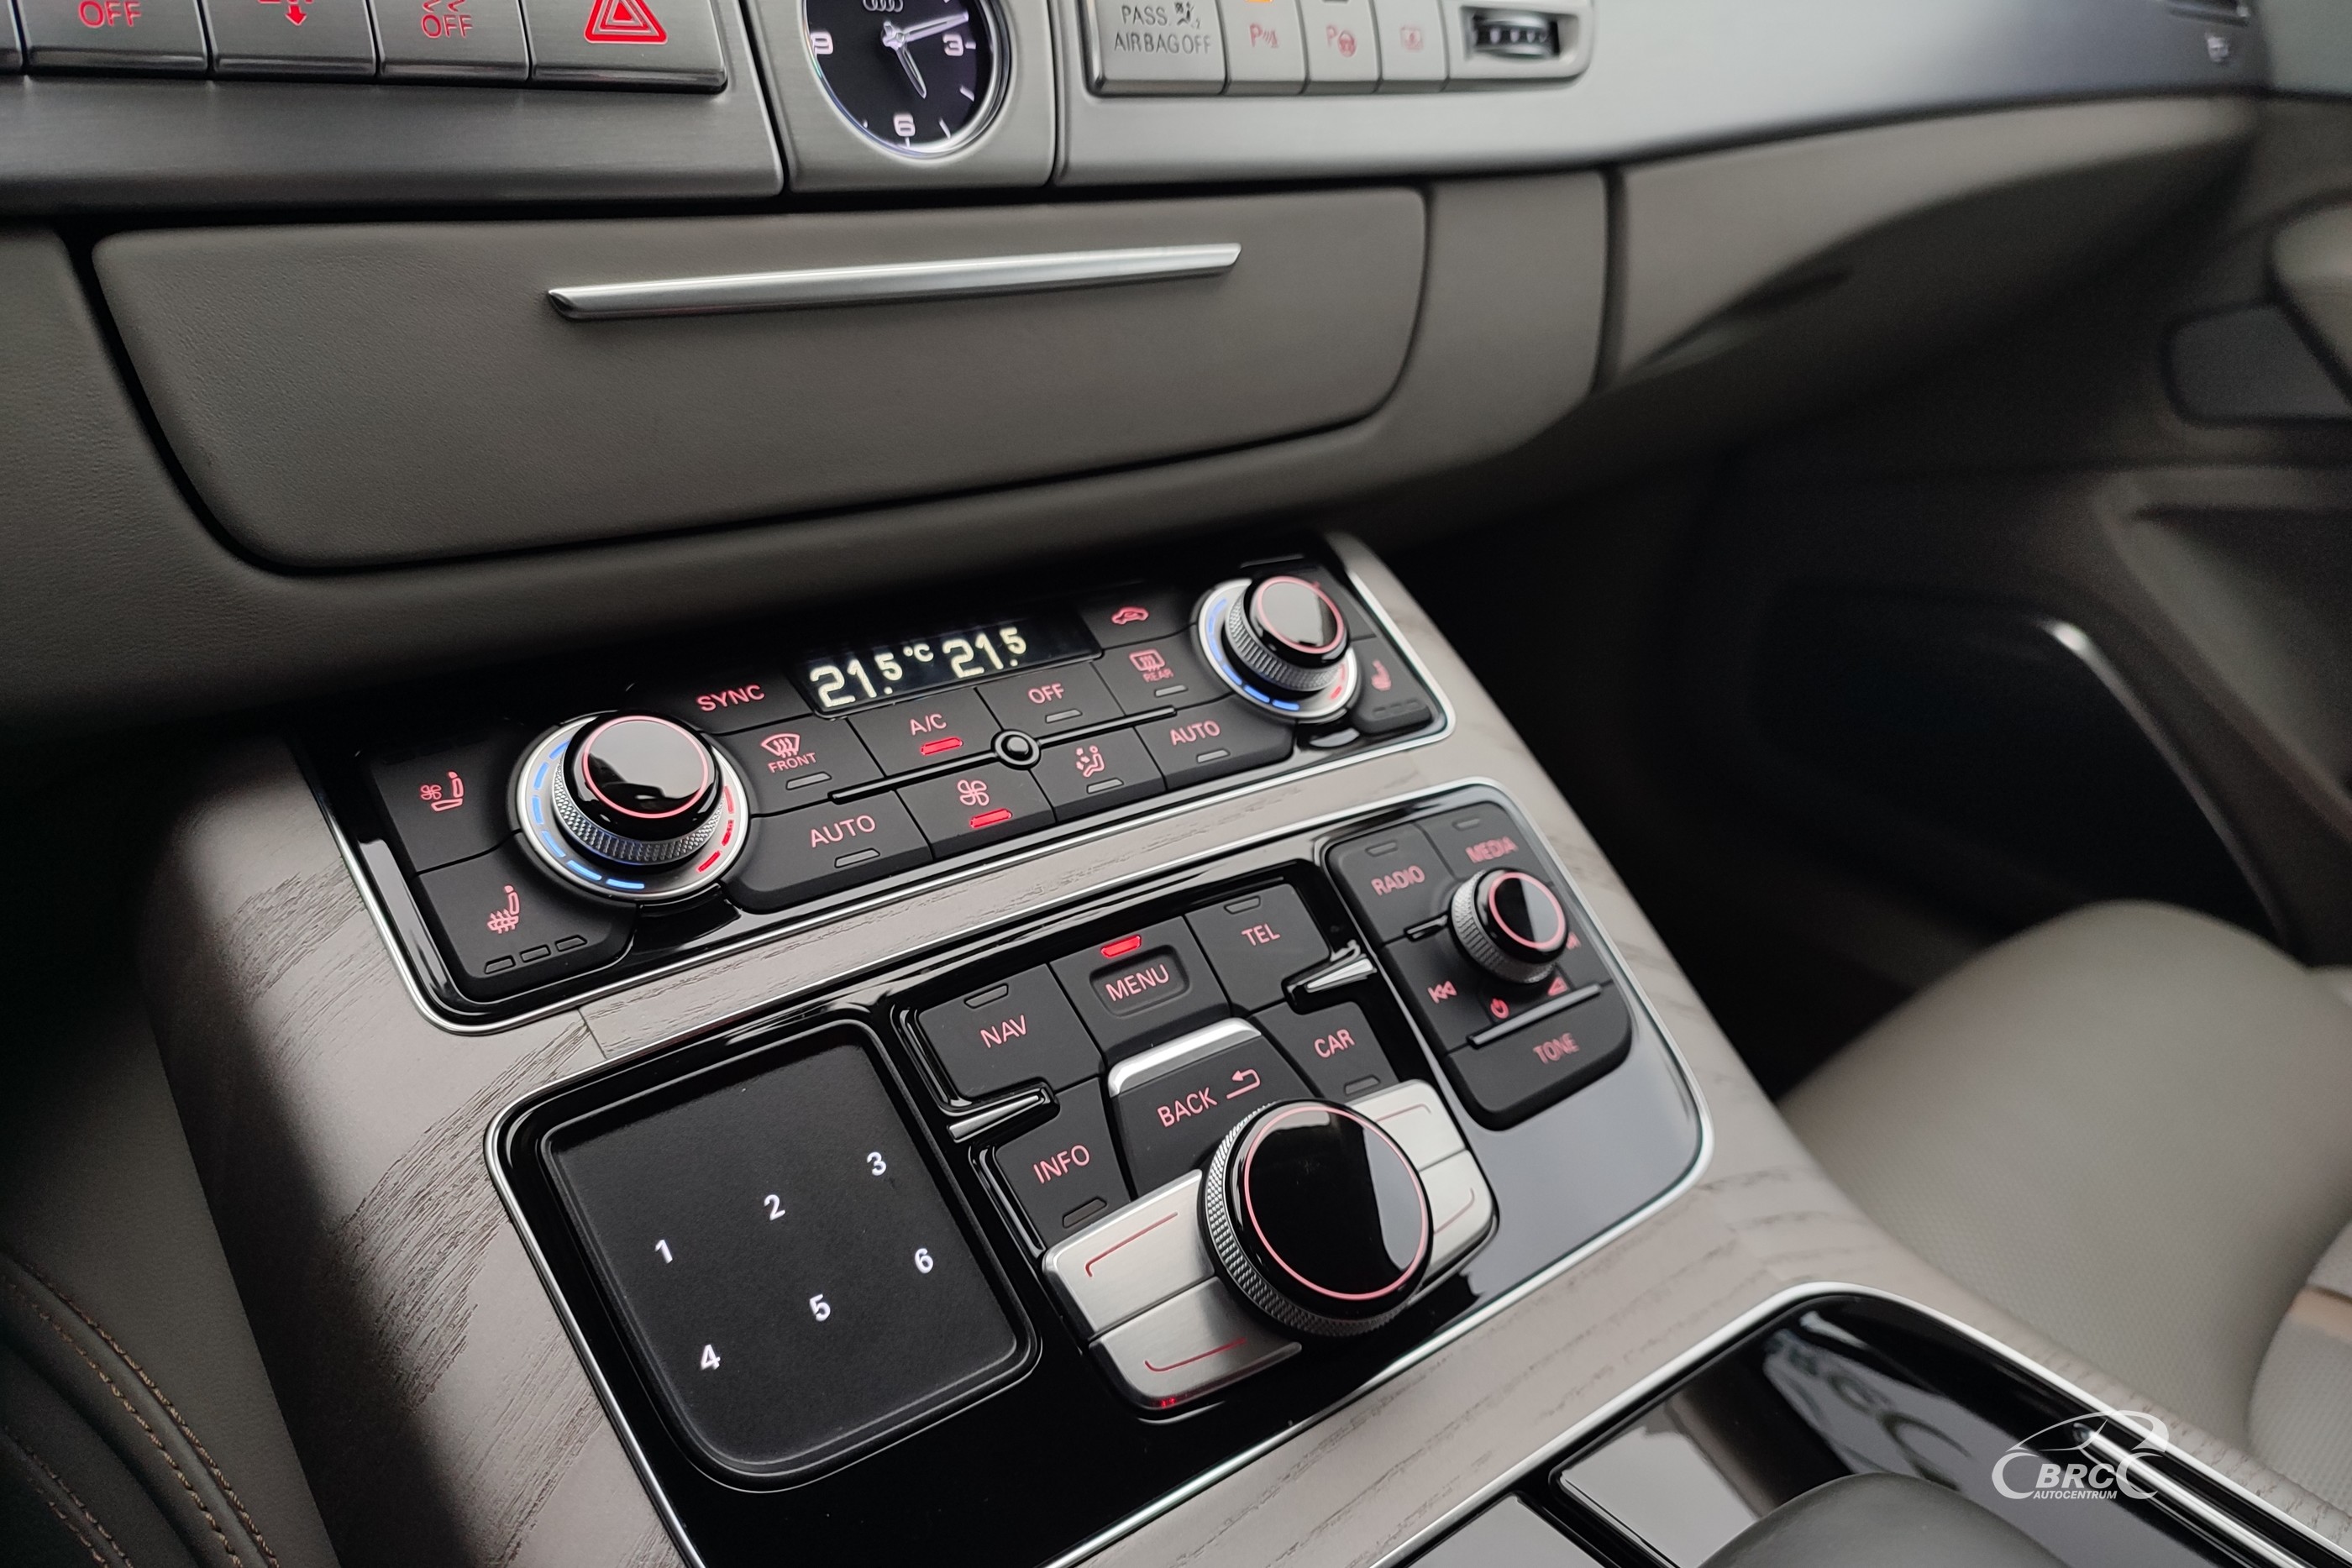 Audi A8 3.0 TDI V6 Quattro Automatas